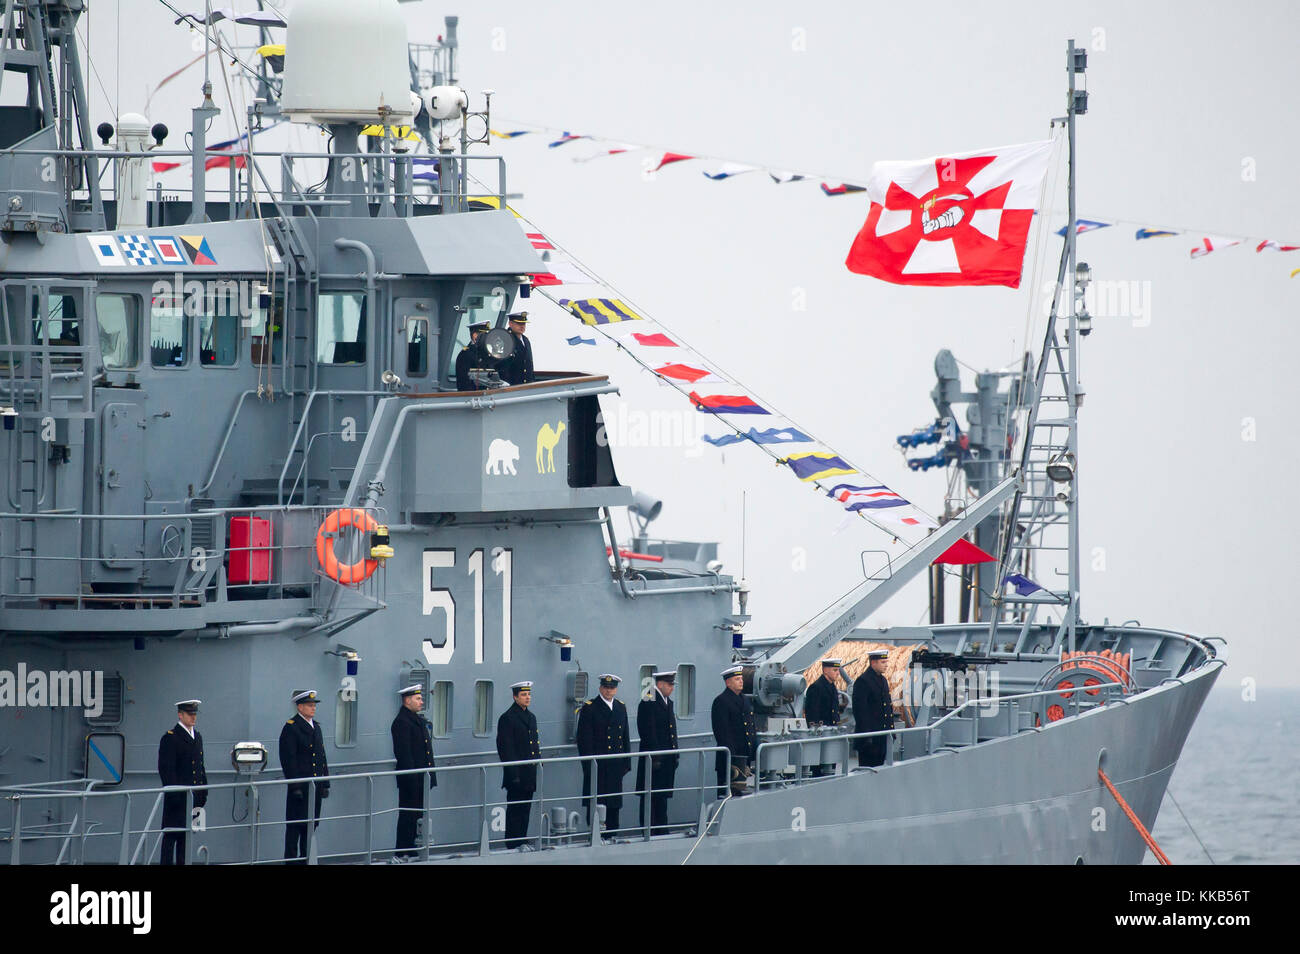 ORP Kontradmiral Xawery Czernicki, multitask logistical support ship of the Polish Navy, in Gdynia, Poland. 28 November 2017  © Wojciech Strozyk / Ala Stock Photo